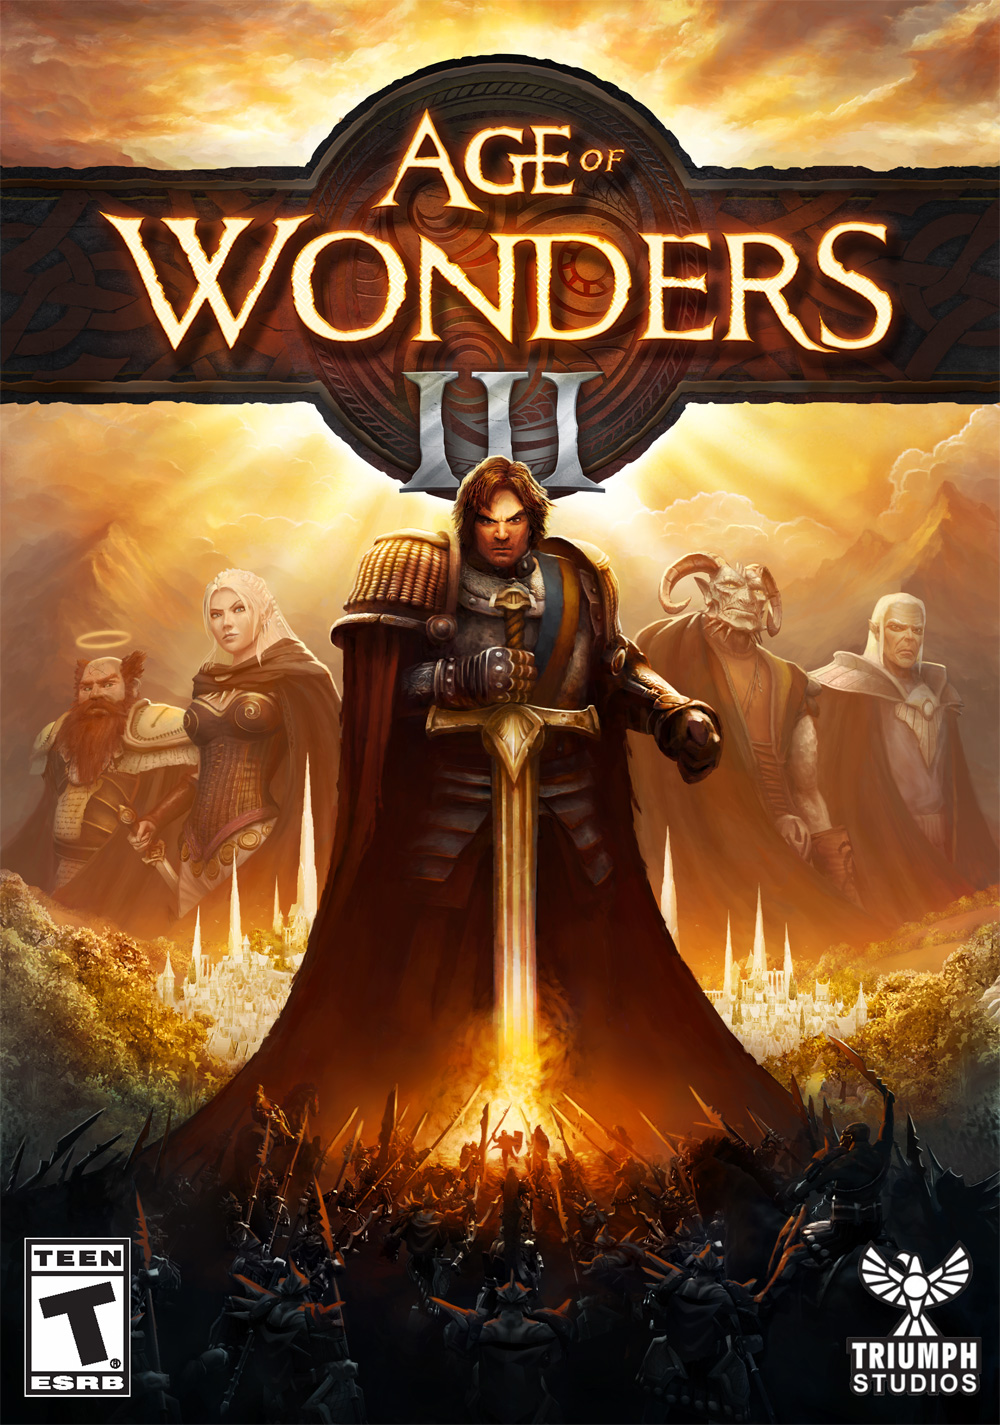 Игра Age of Wonders III для PC(ПК), Русский язык, электронный ключ, Steam